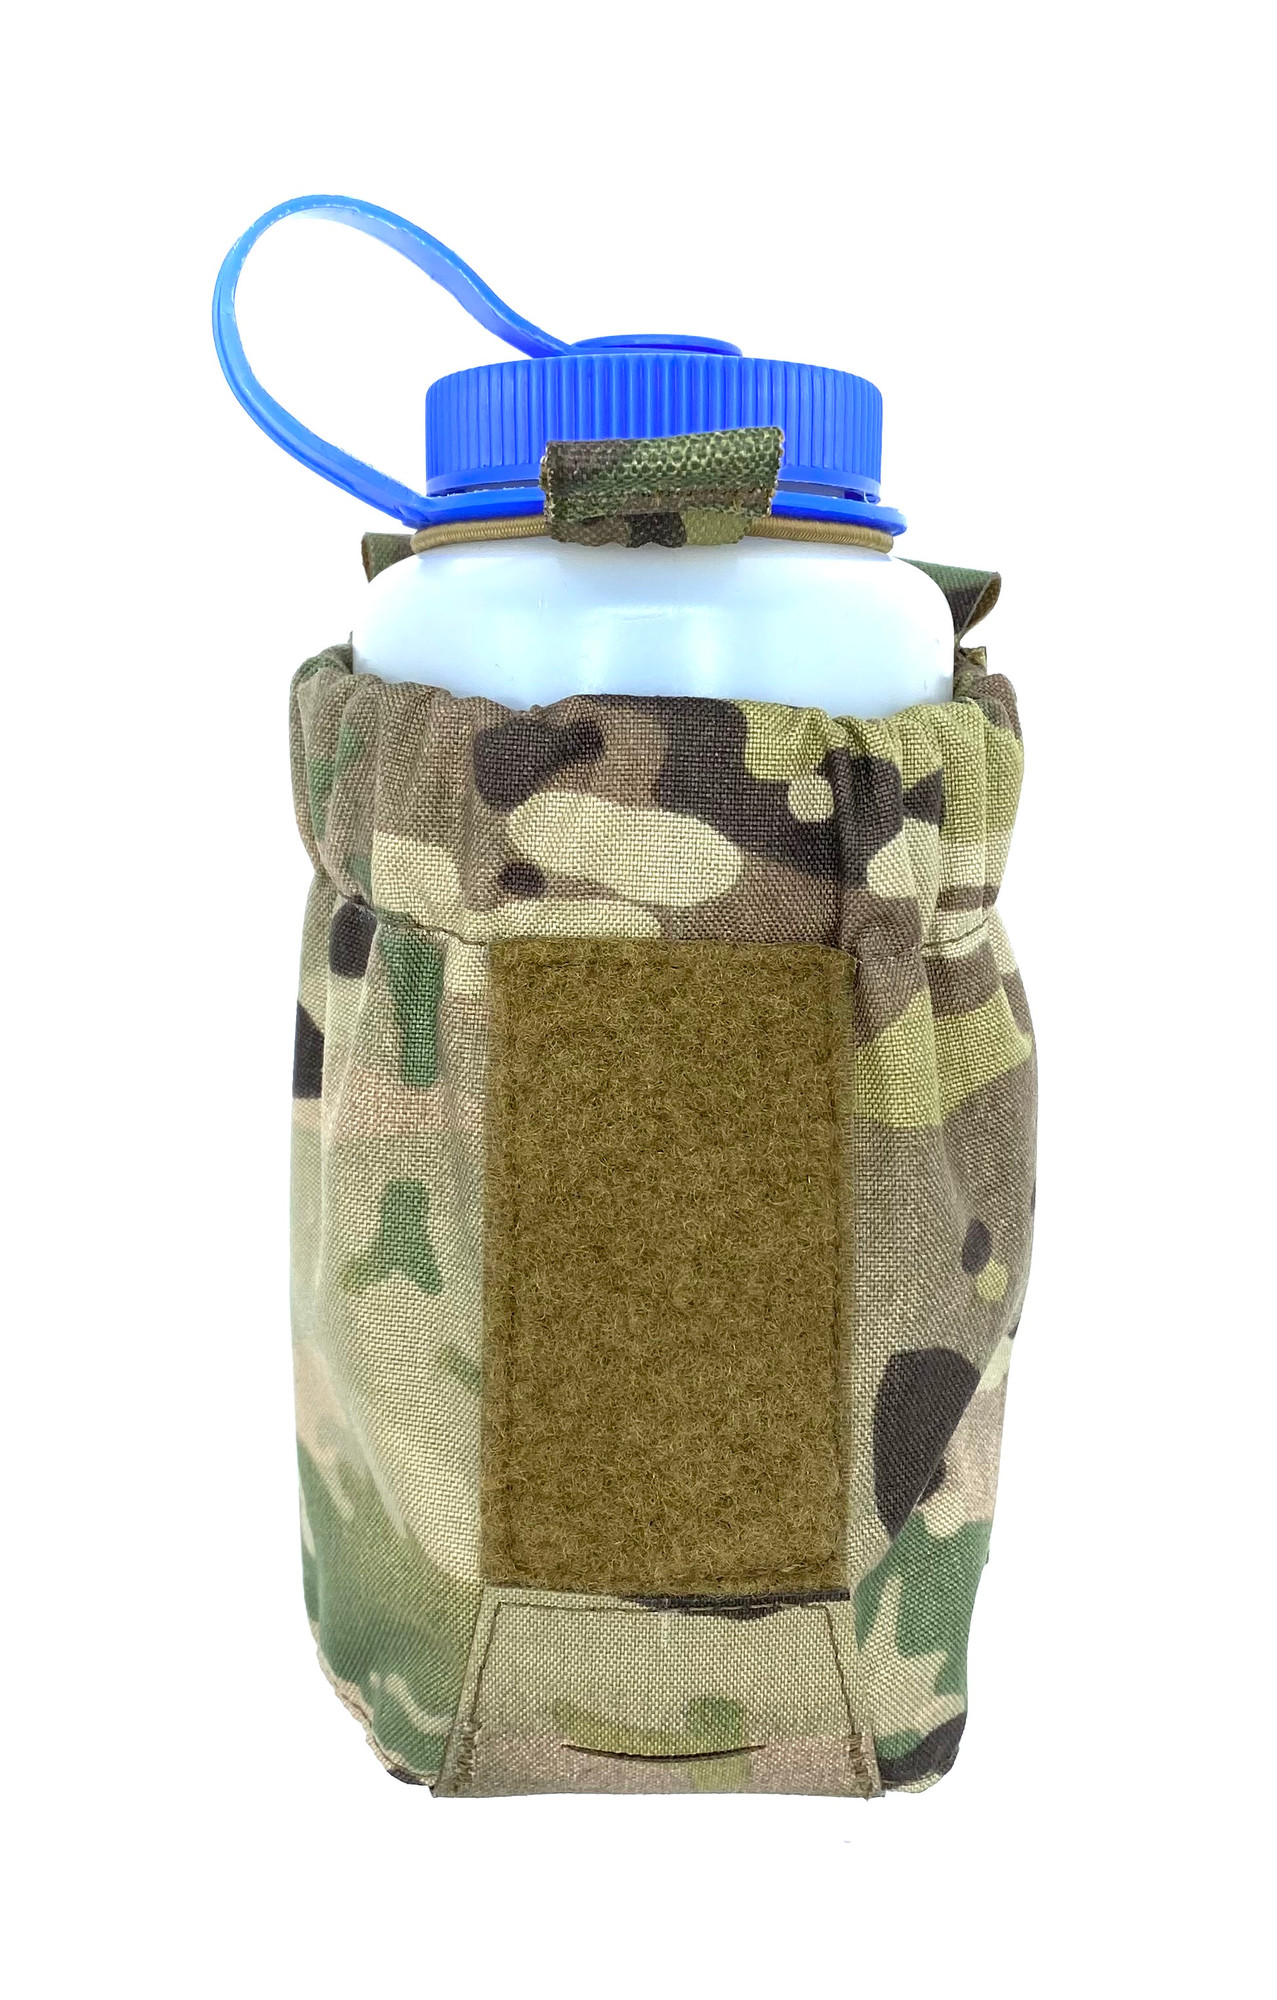  WYNEX Tactical Water Bottle Pouch of Weave Design, MOLLE Bottle  Holder Kettle Pouches Hydration Carrier Bag, Adjustable H20 Bottle Holster  Waist Pack for Hydro Flask, Nalgene, Contigo Bottle : Sports